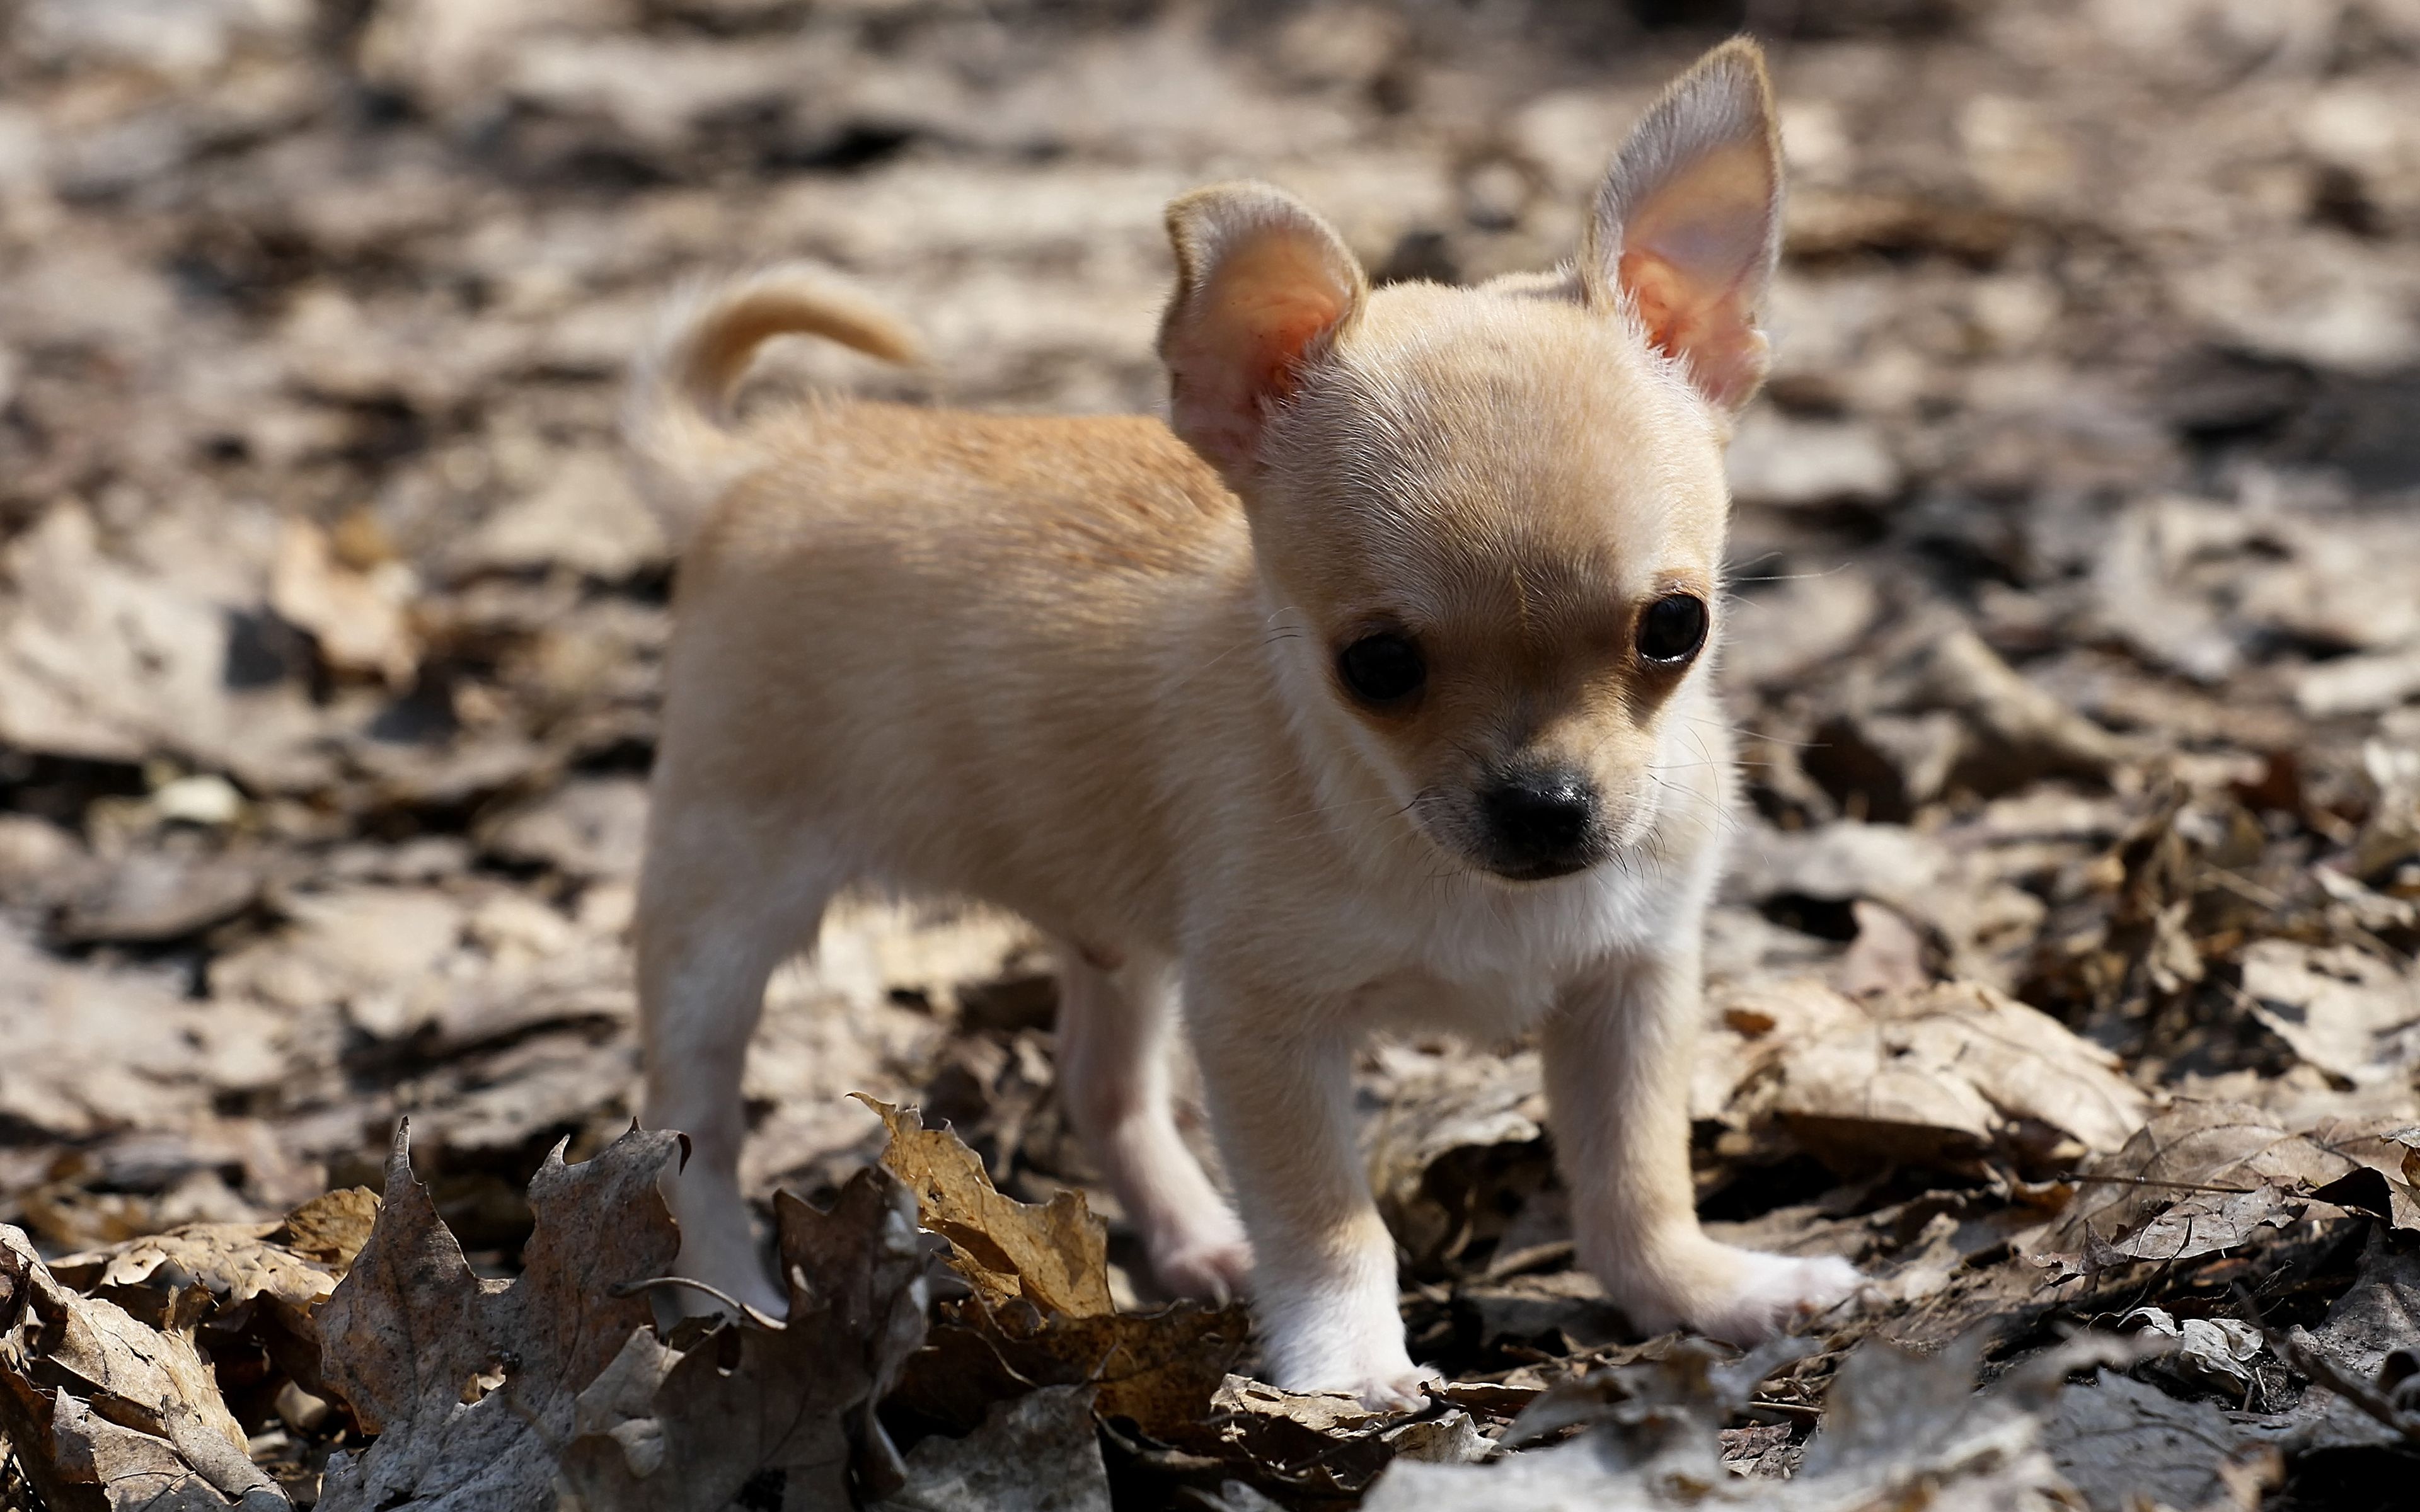 Chihuahuas Very Cute Puppy Wallpaper